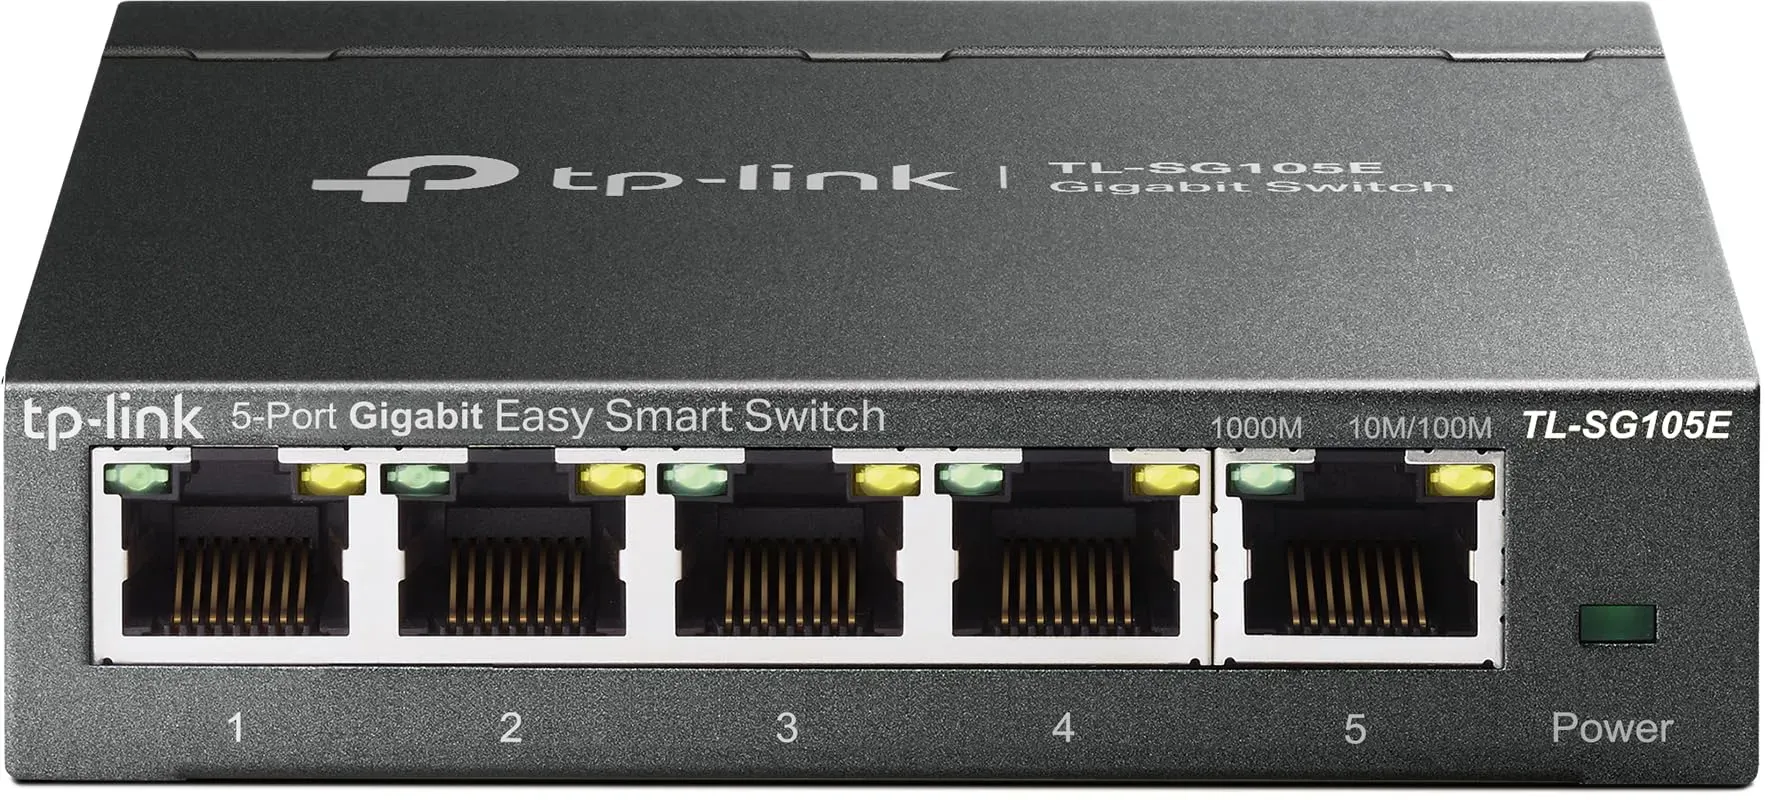 Bild von TL-SG105E 5-Port Gigabit Easy Smart Switch